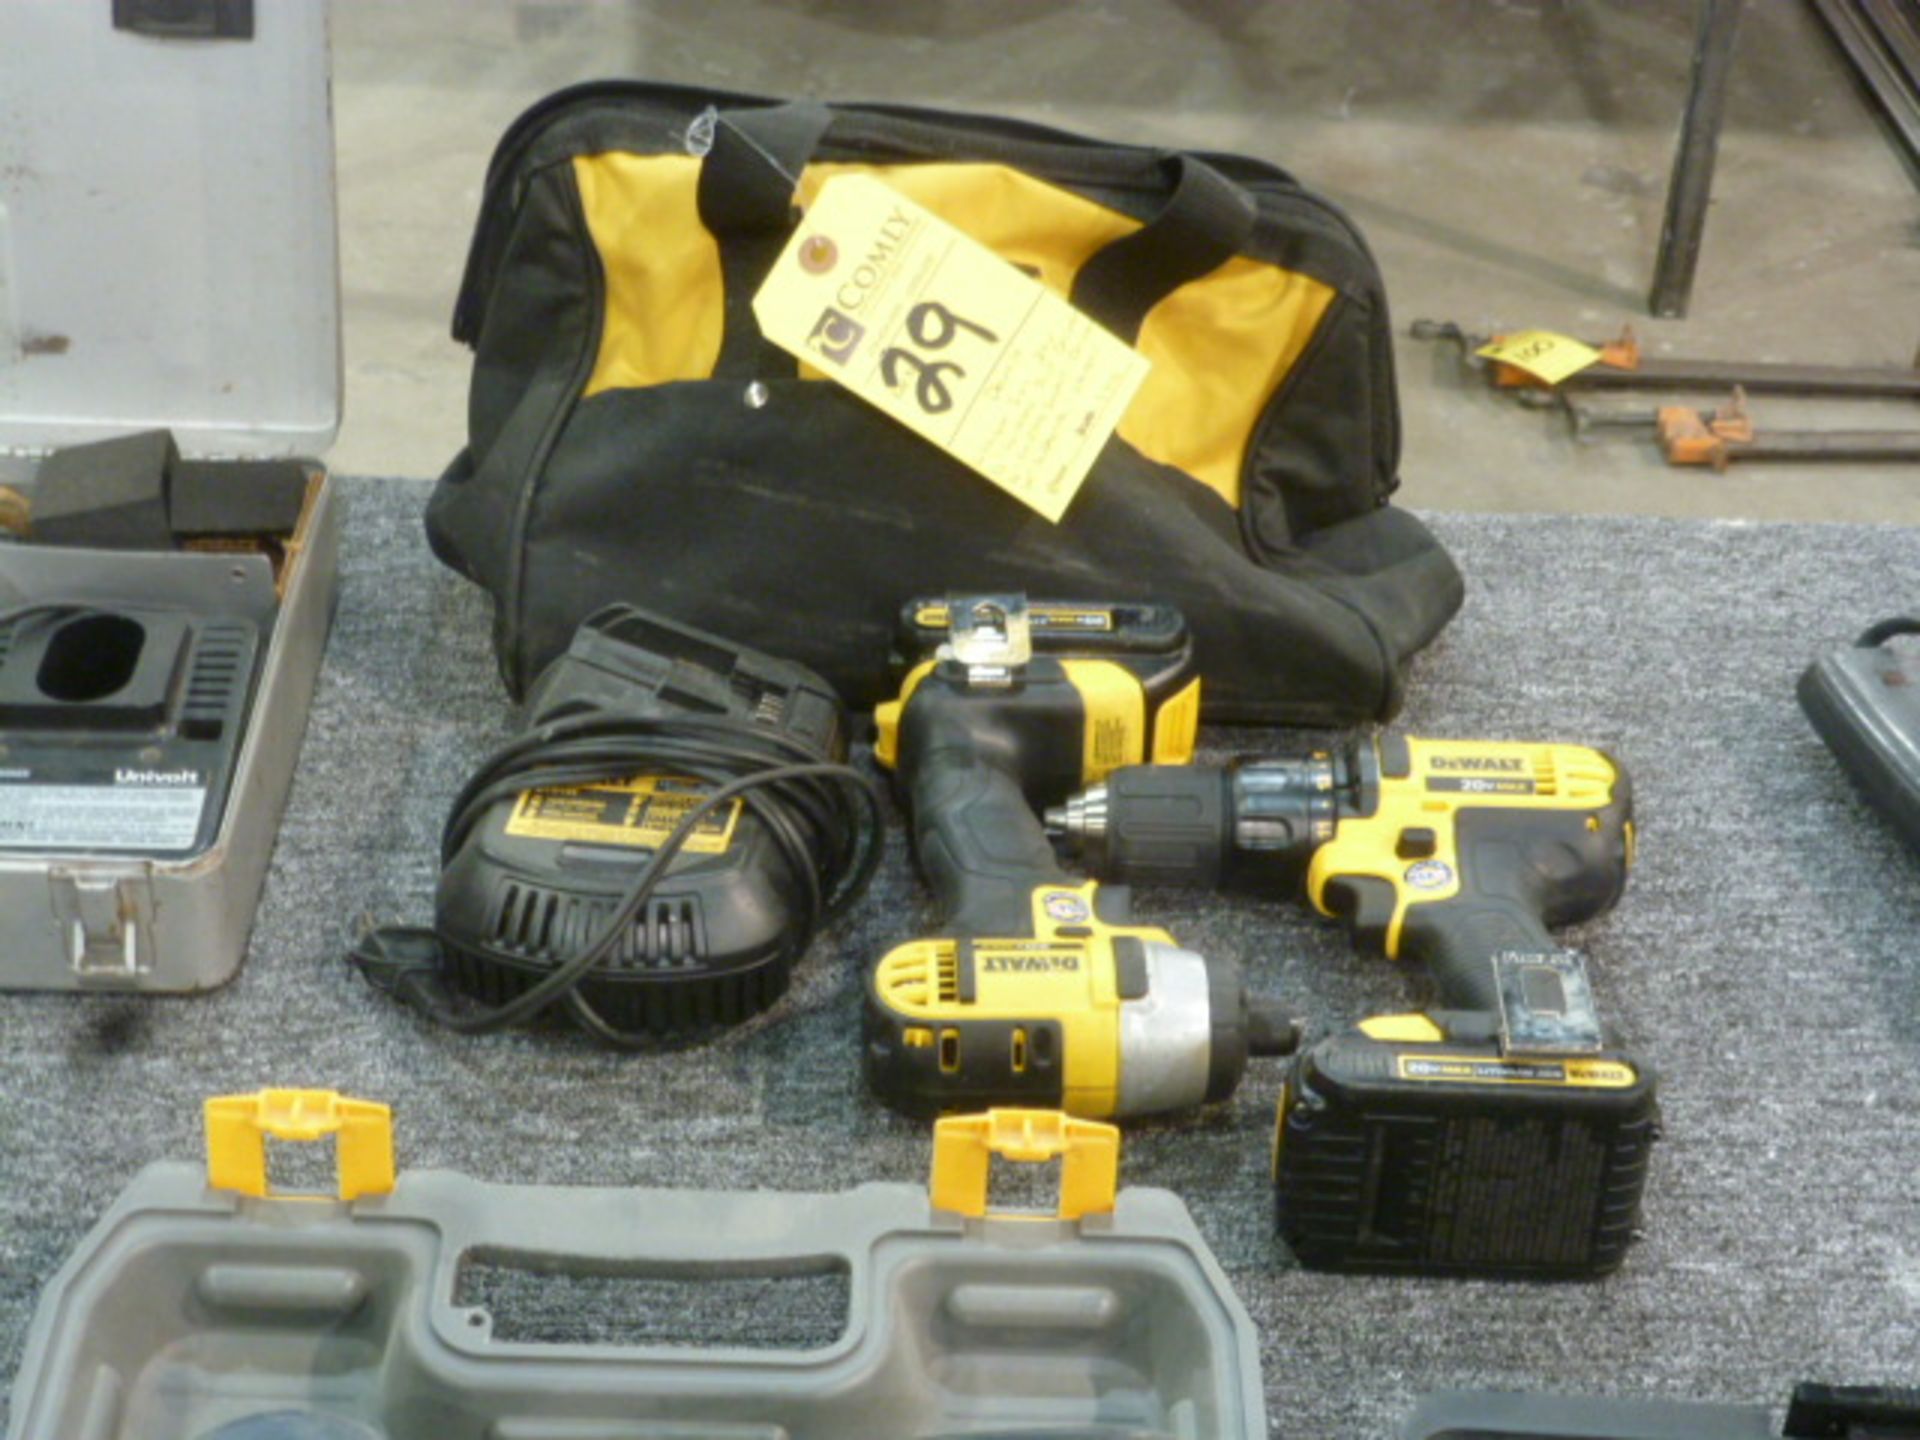 Dewalt Cordless 20V Drill & Impact Driver Set w/(1) Charger, (2) Batteries, & Bag (Lot)